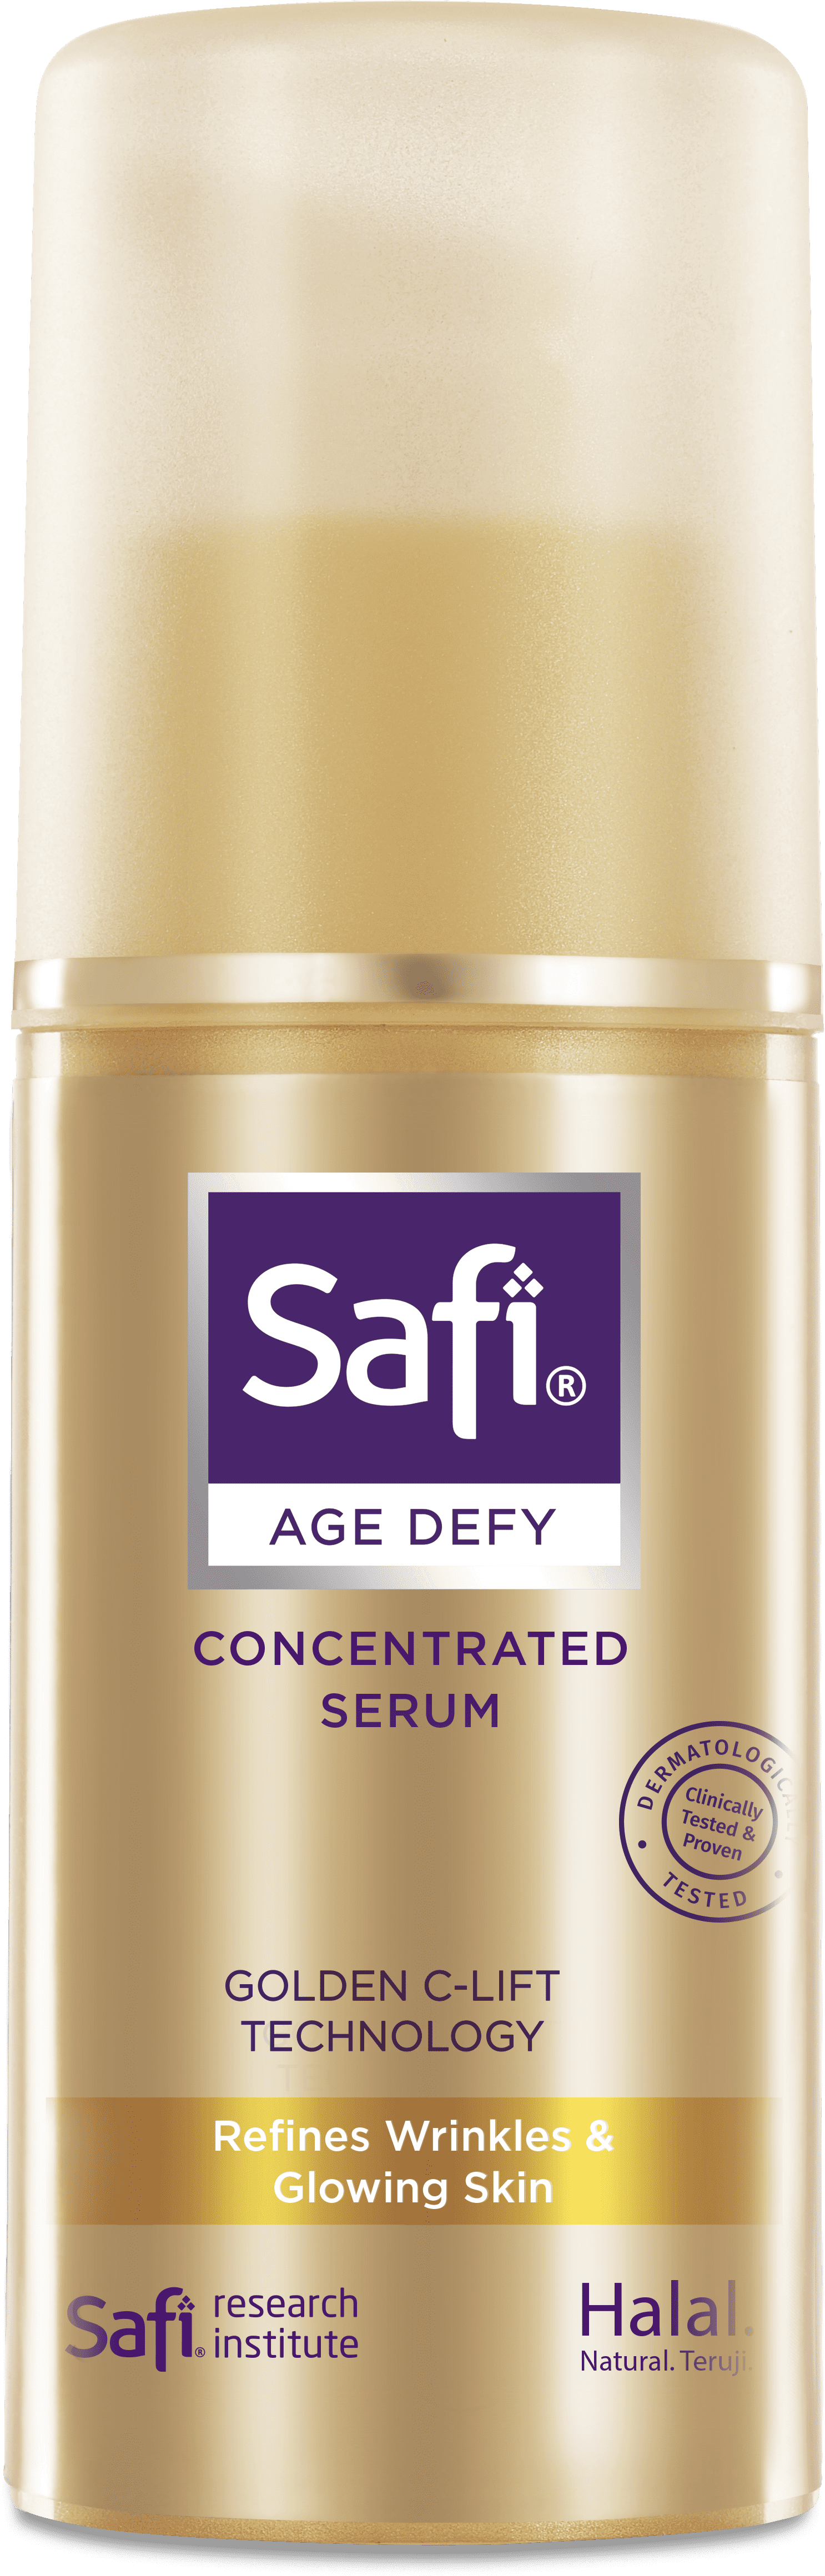 Skincare Halal Anti Aging Kecantikan Kulit - Safi Age Defy Concentrated Serum 